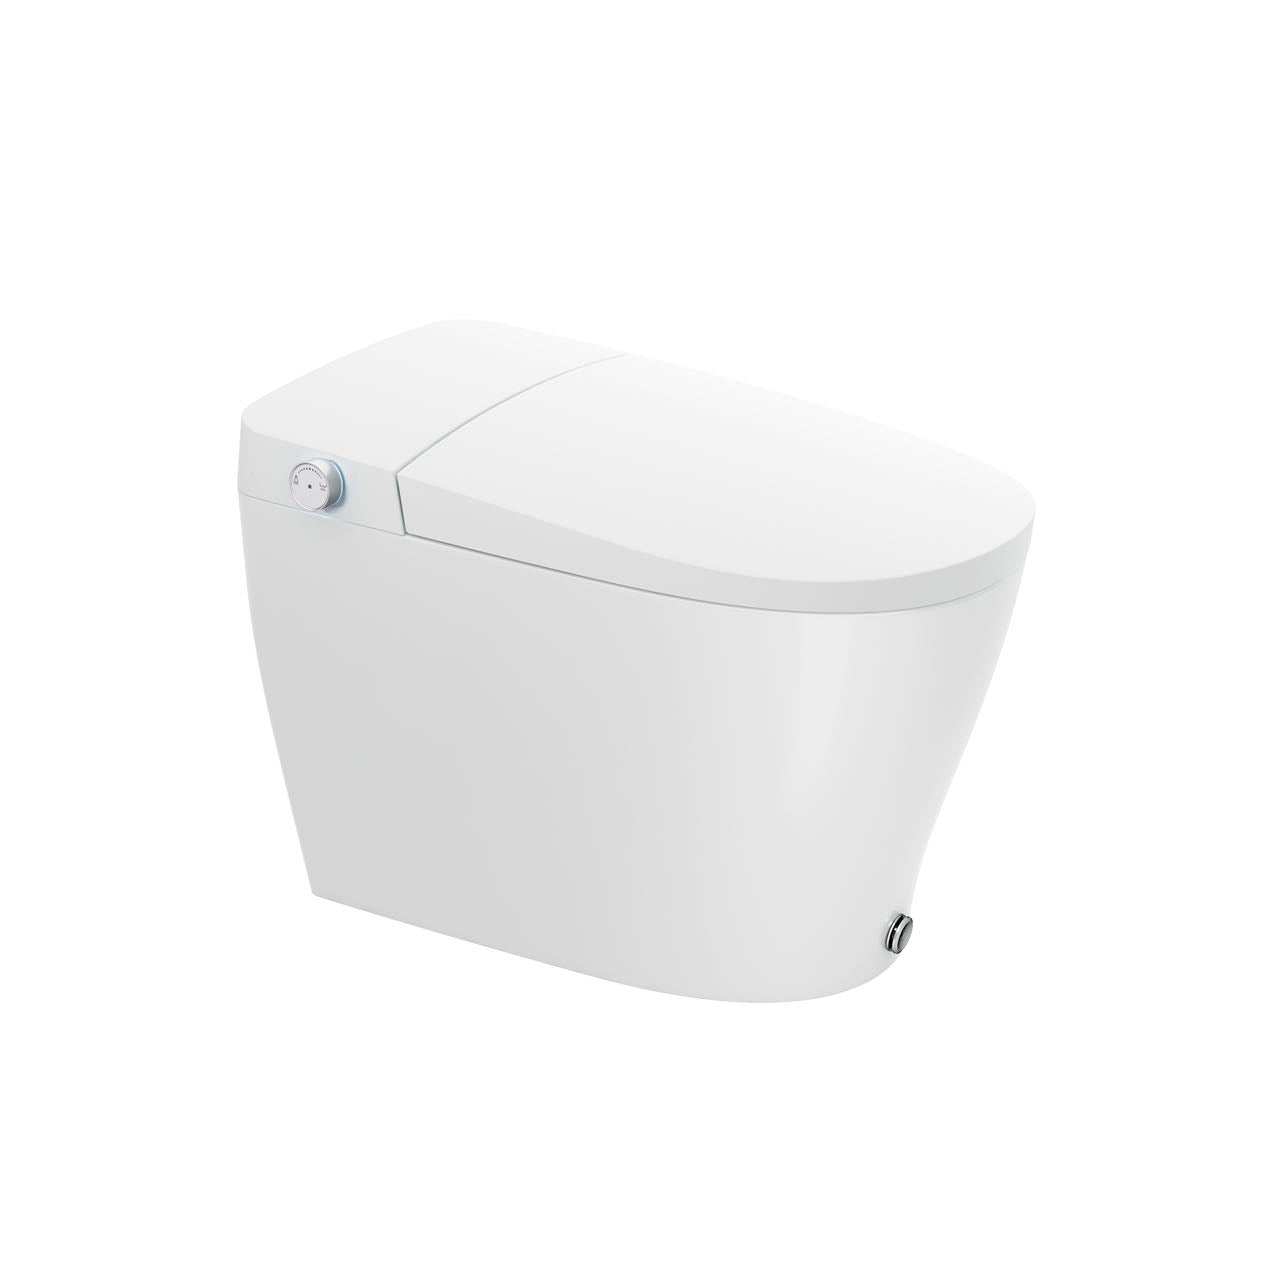 Warm Air Dryer, Smart Touch Panel, Heated Bidet Toilet Seat Elongated